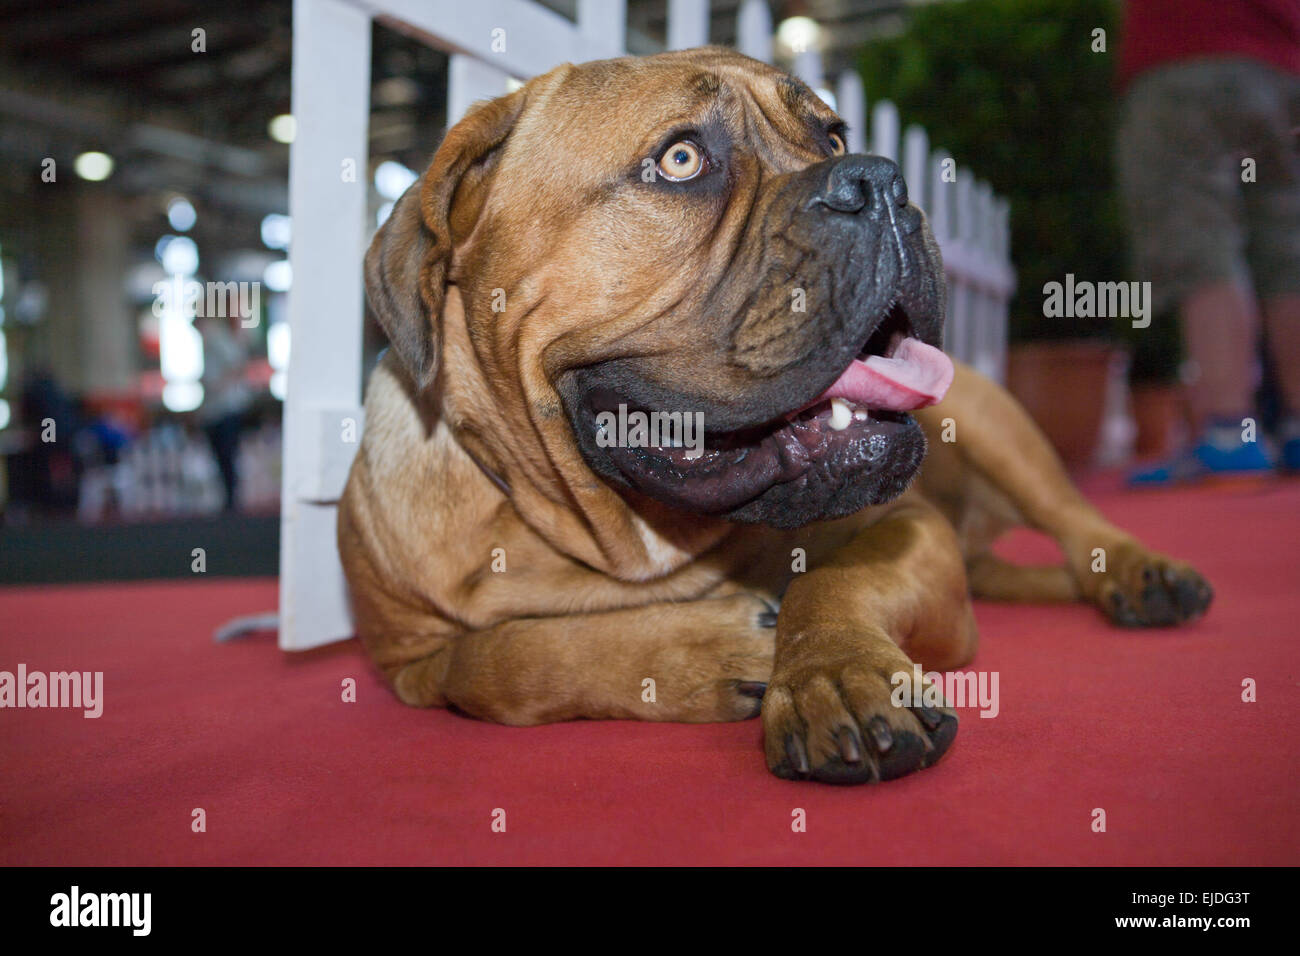 A big beautiful Bullmastiff dog portrait lying on red carpet Stock Photo